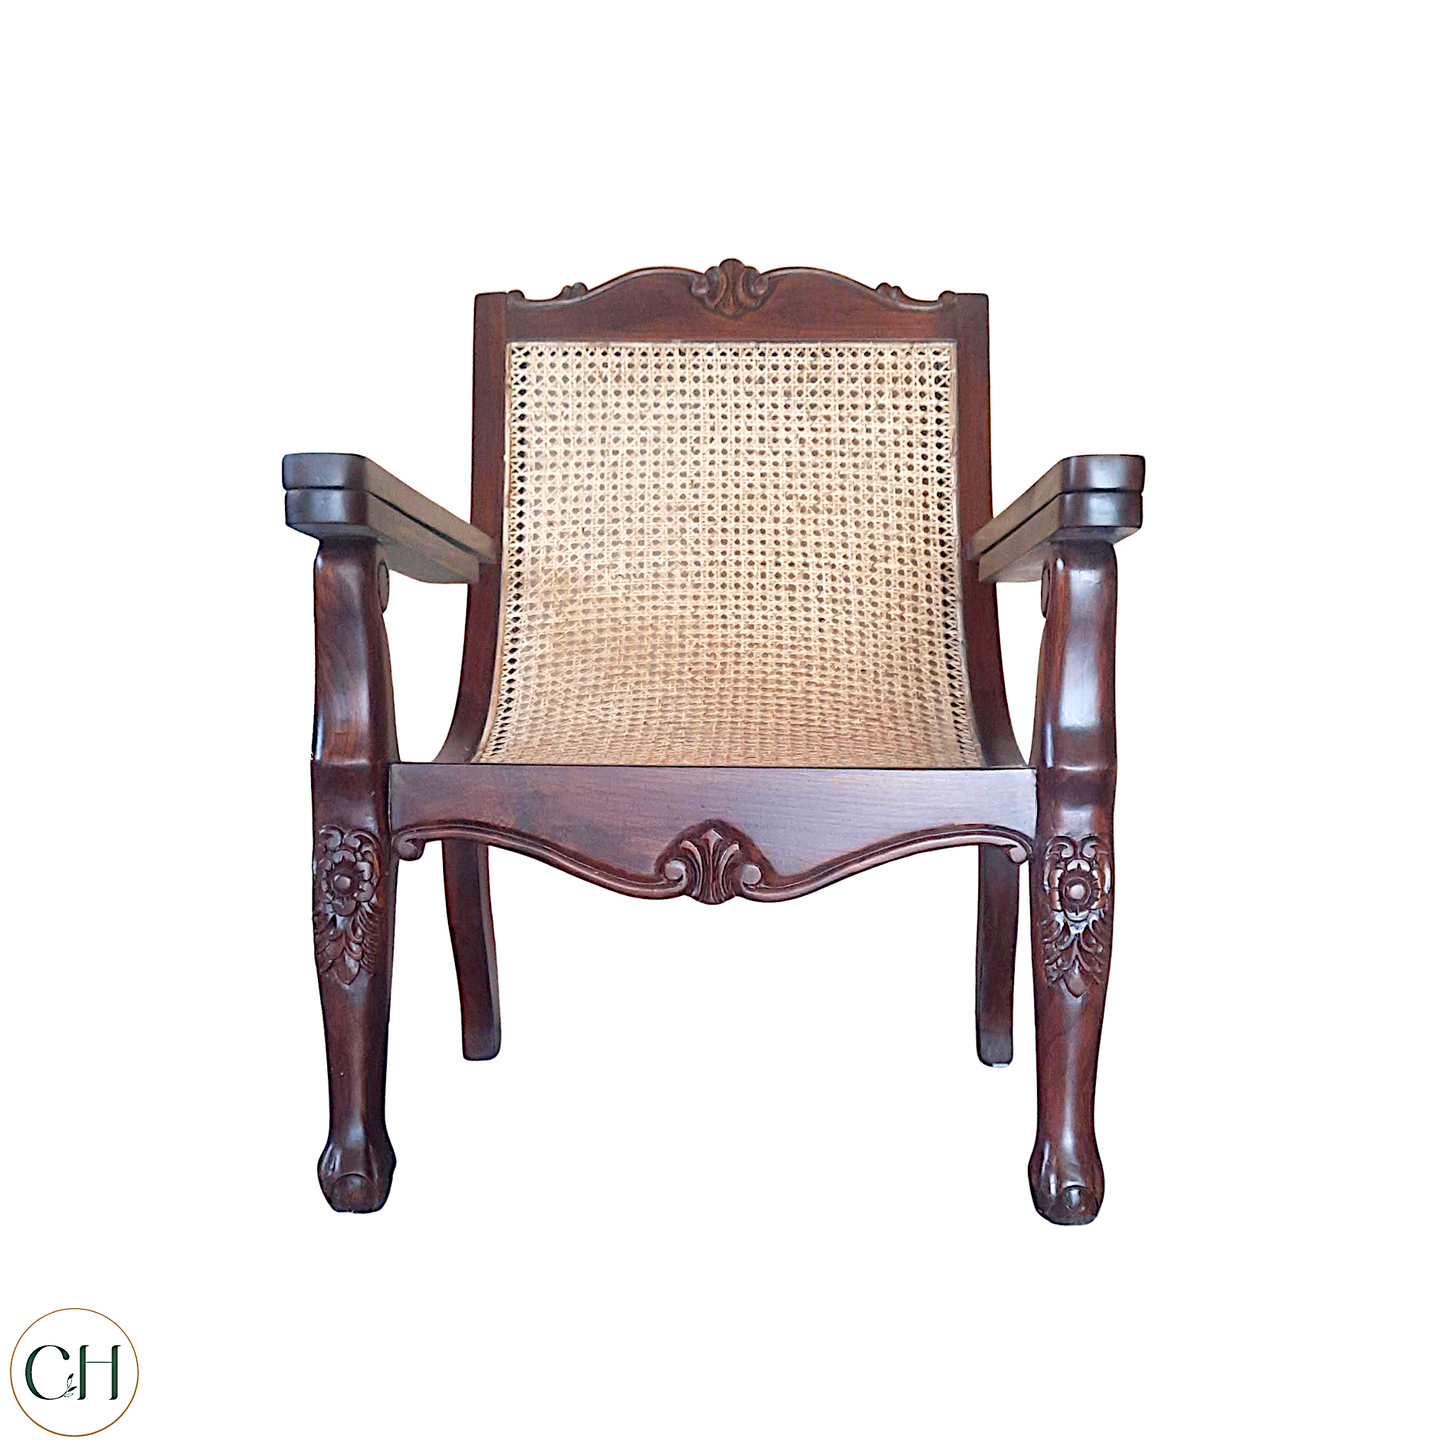 Raj - Teakwood Planters Chair with Extendable Arms - CustHum